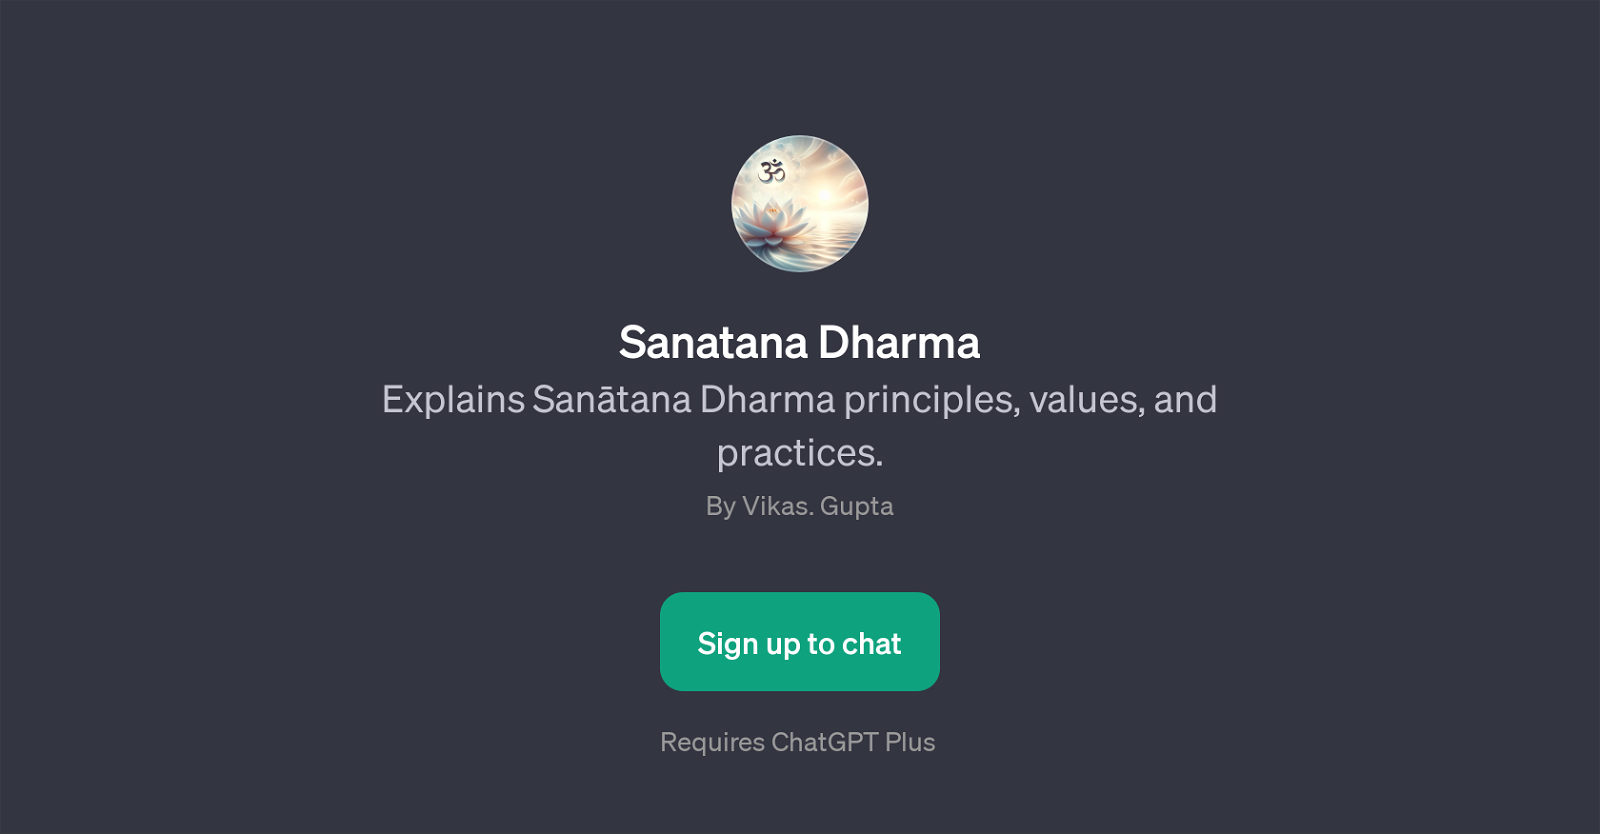 Sanatana Dharma website